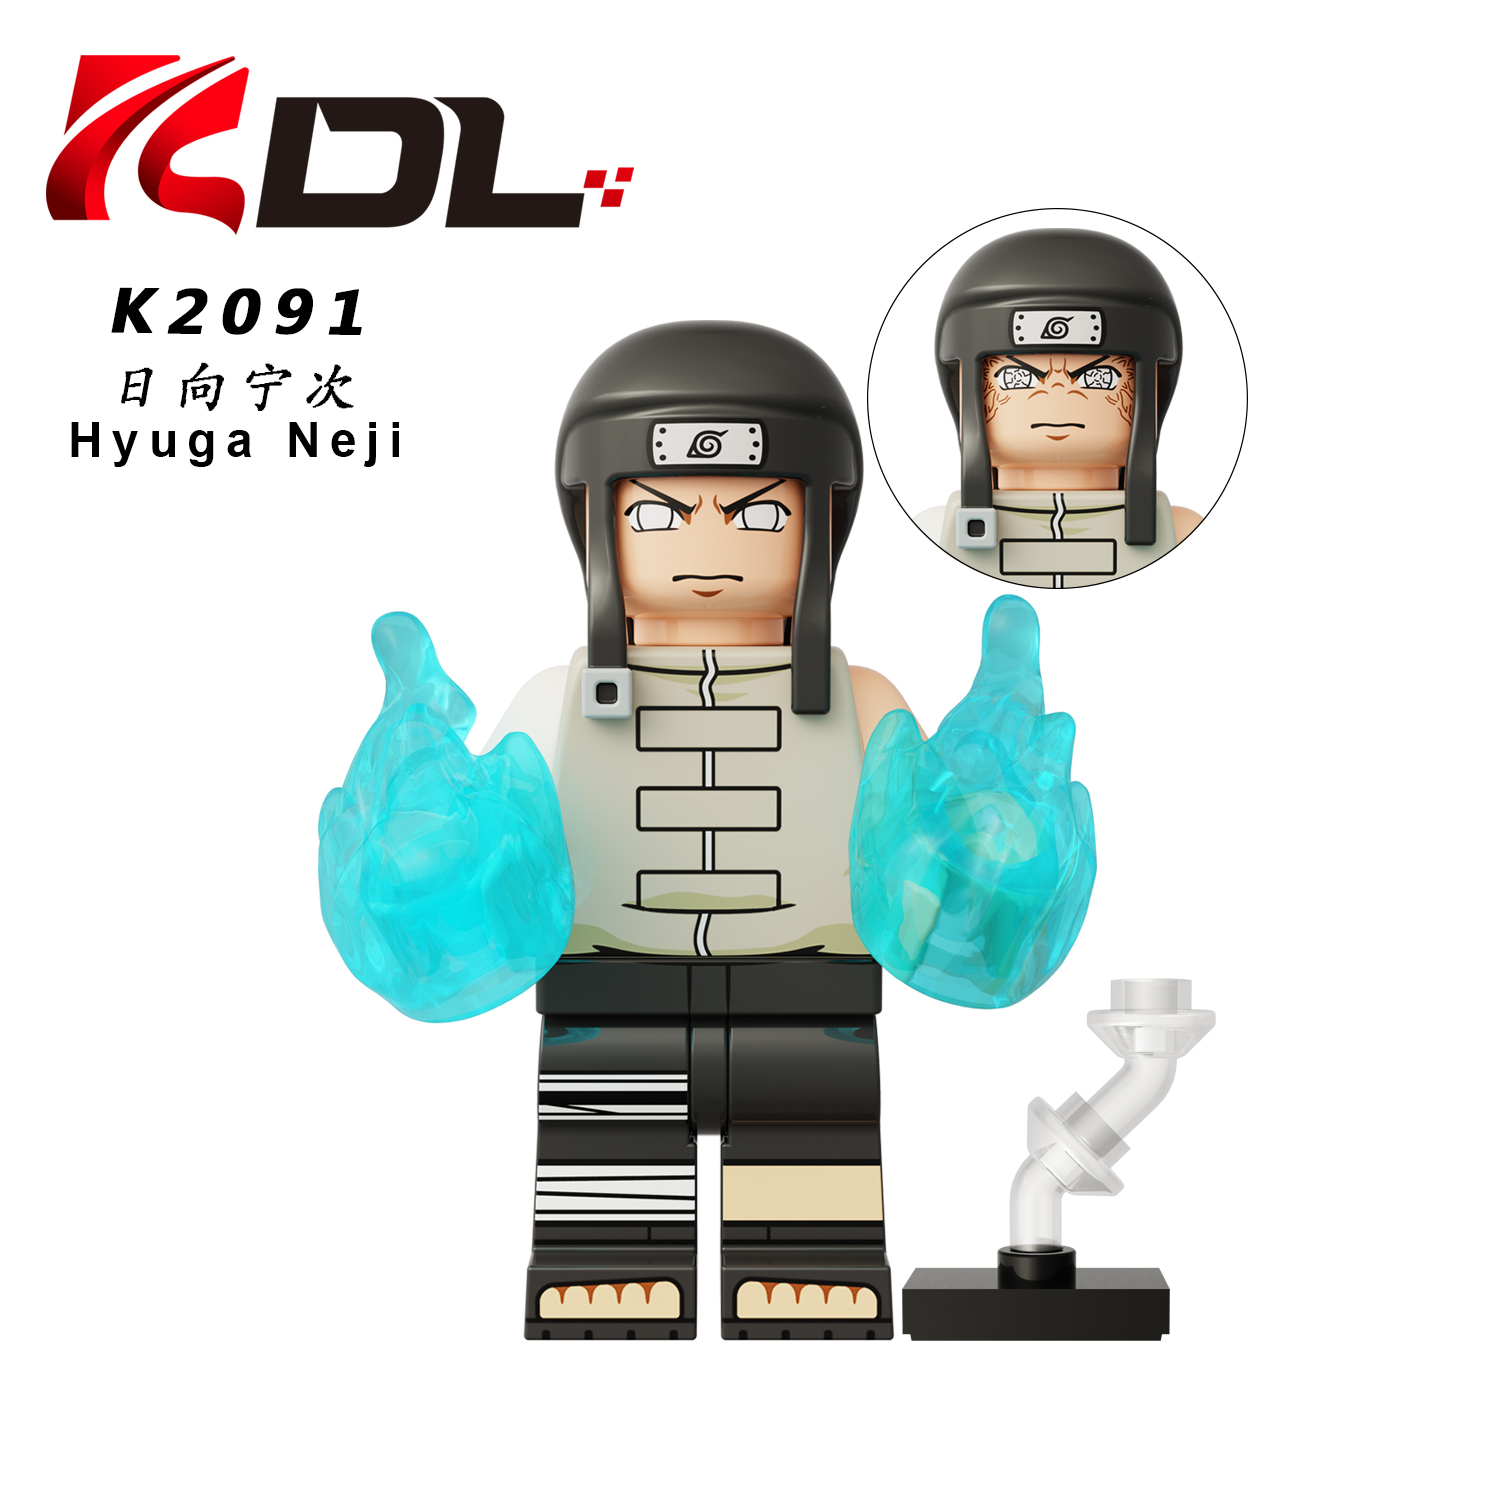 KDL812 K2085 K2086 K2087 K2088 K2089 K2090 K2091 K2092 Naruto Series Building Blocks Action Figures Educational Toys For Kids